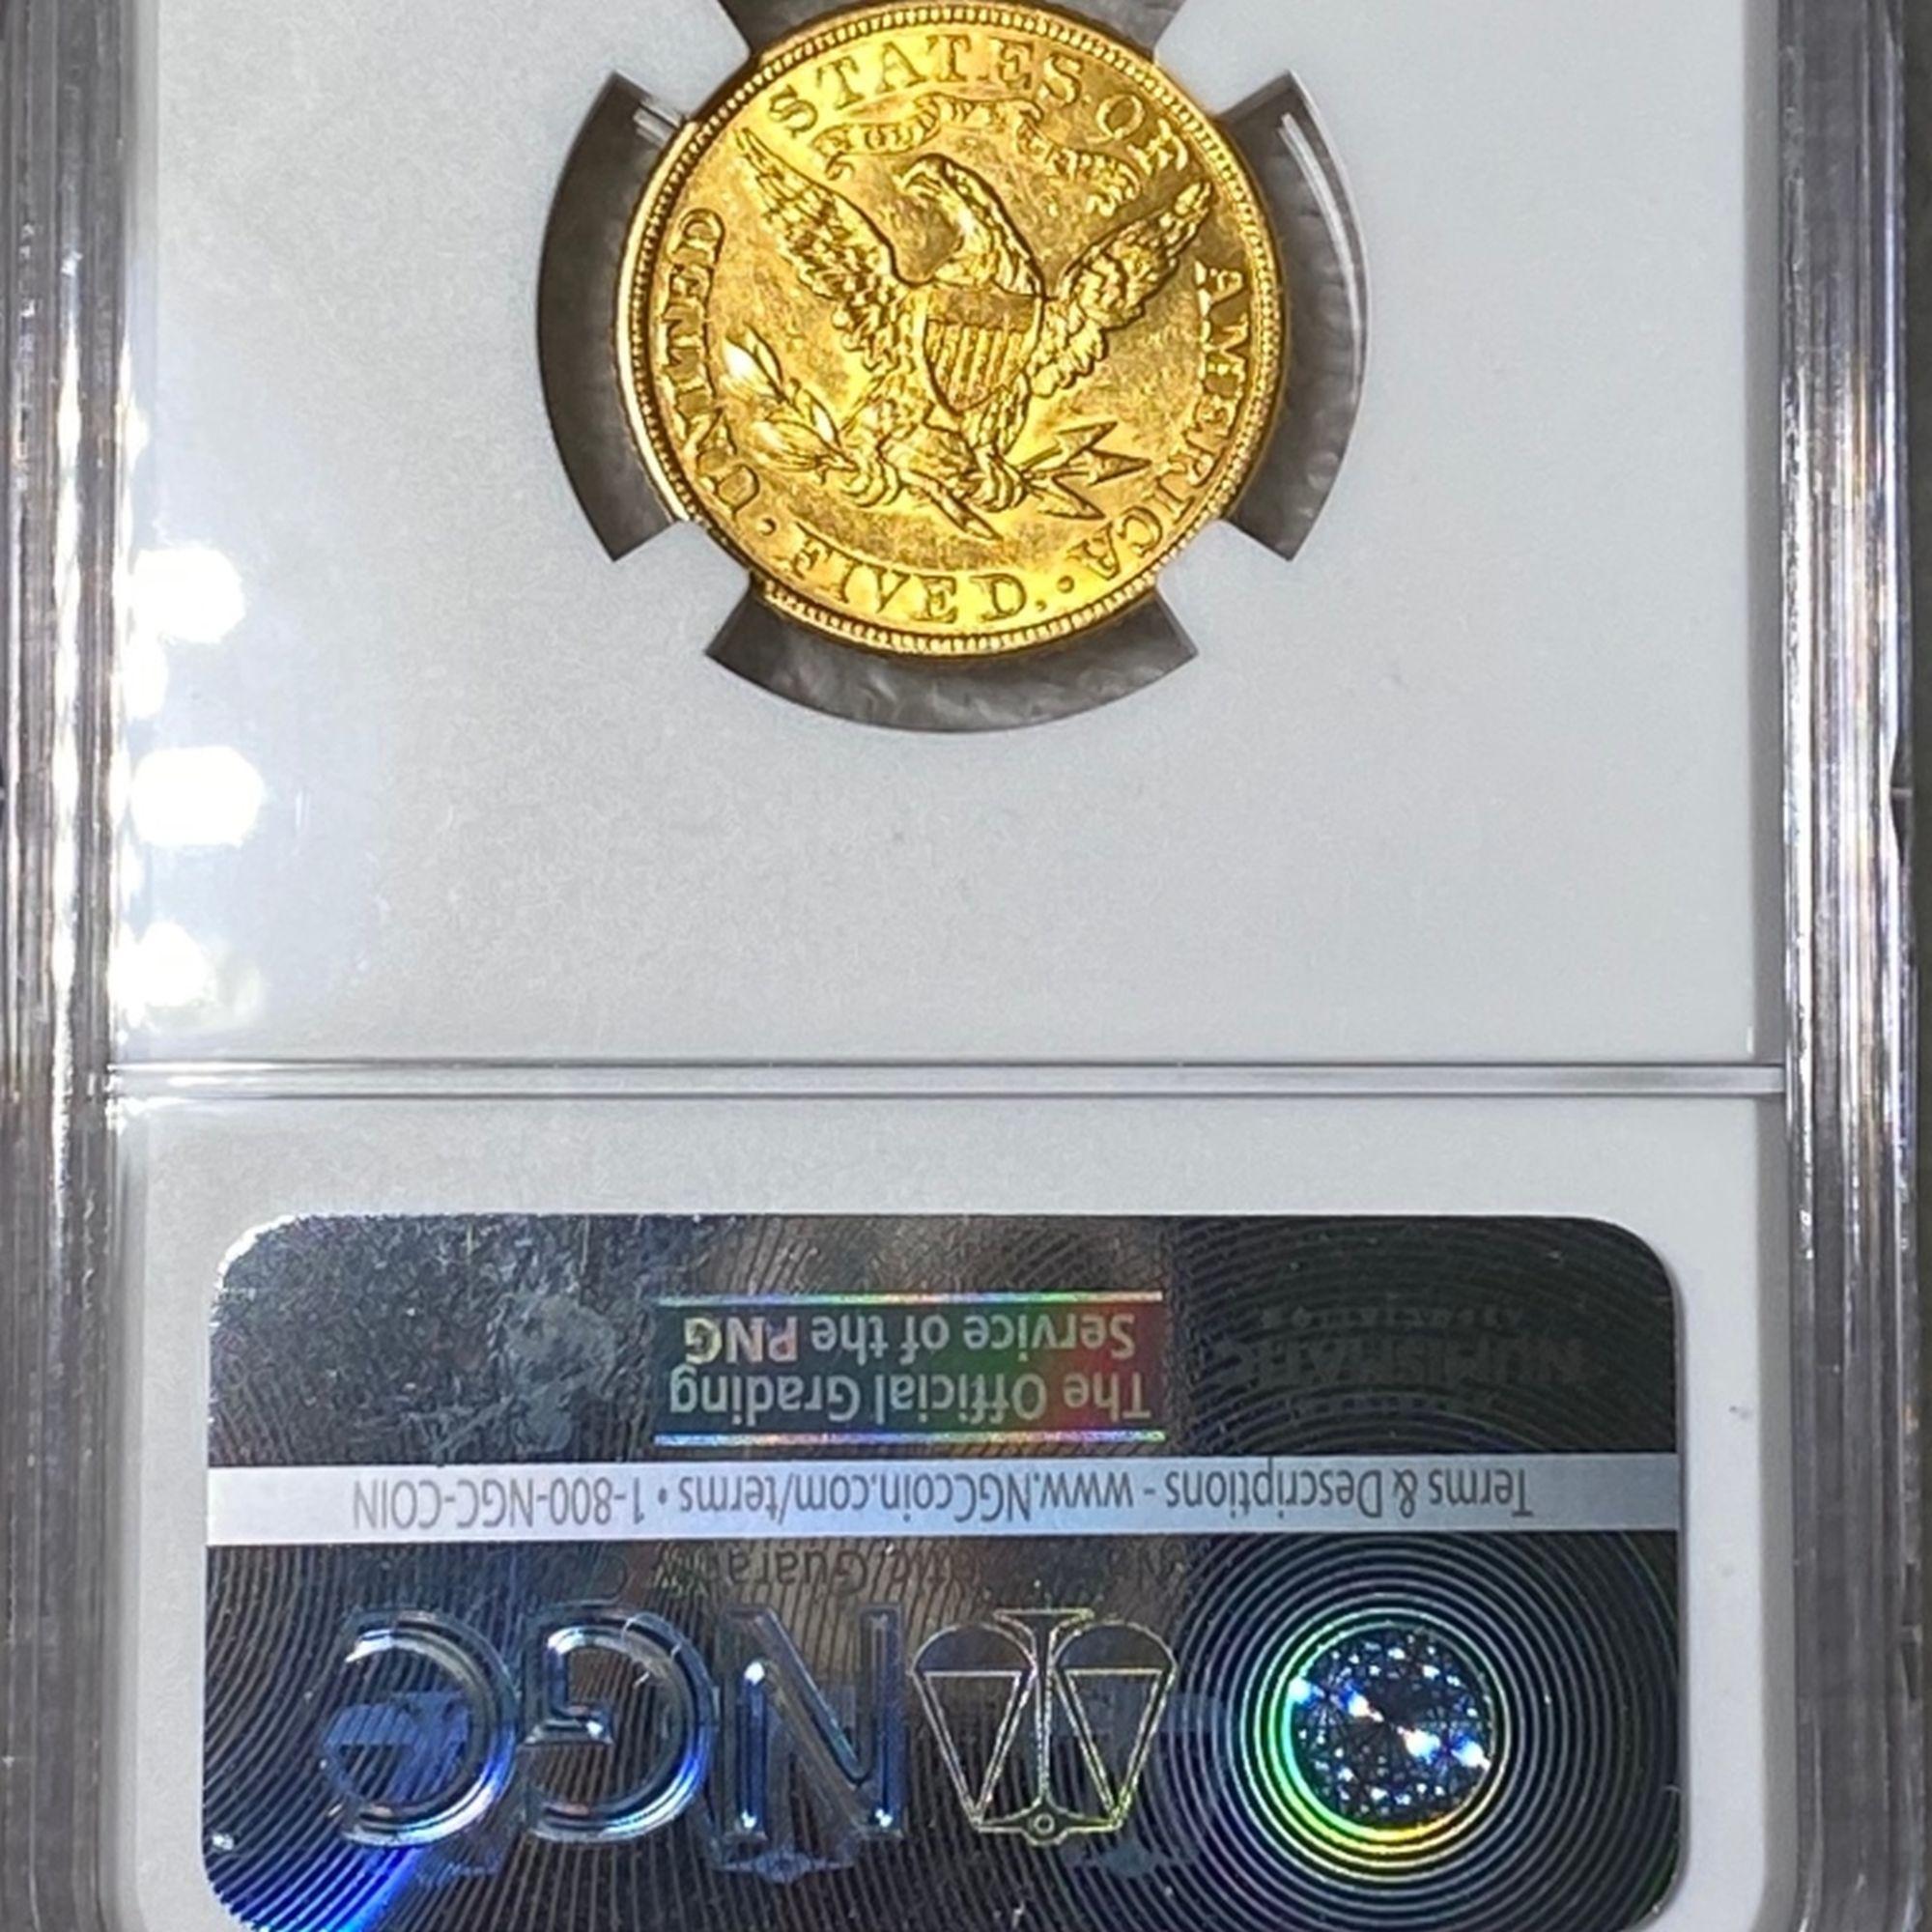 1907 $5 Gold Half Eagle NGC - AU58